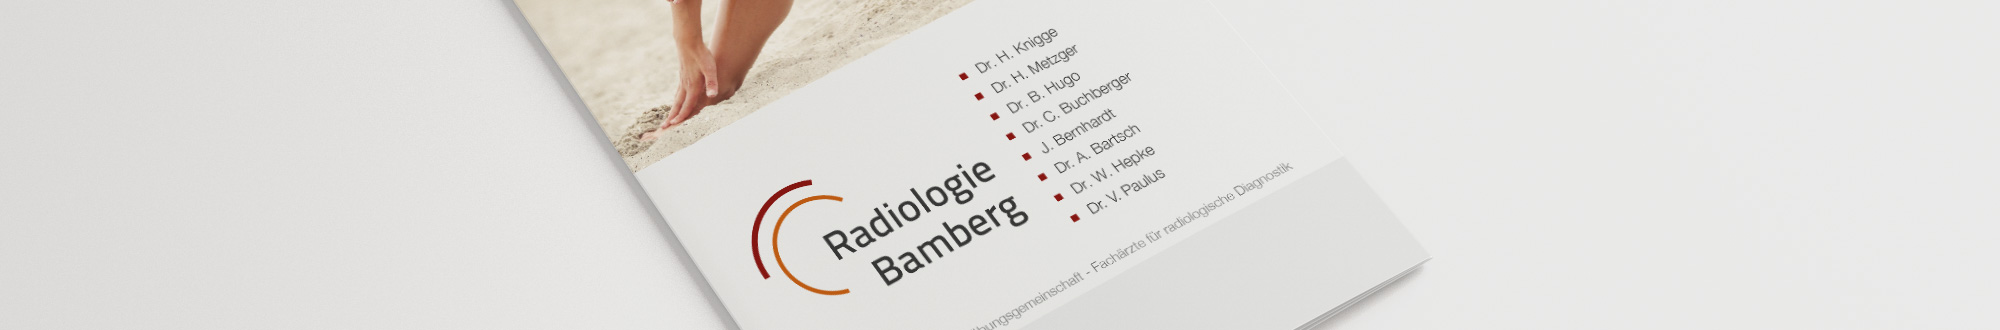 Radiologie Bamberg Showcase